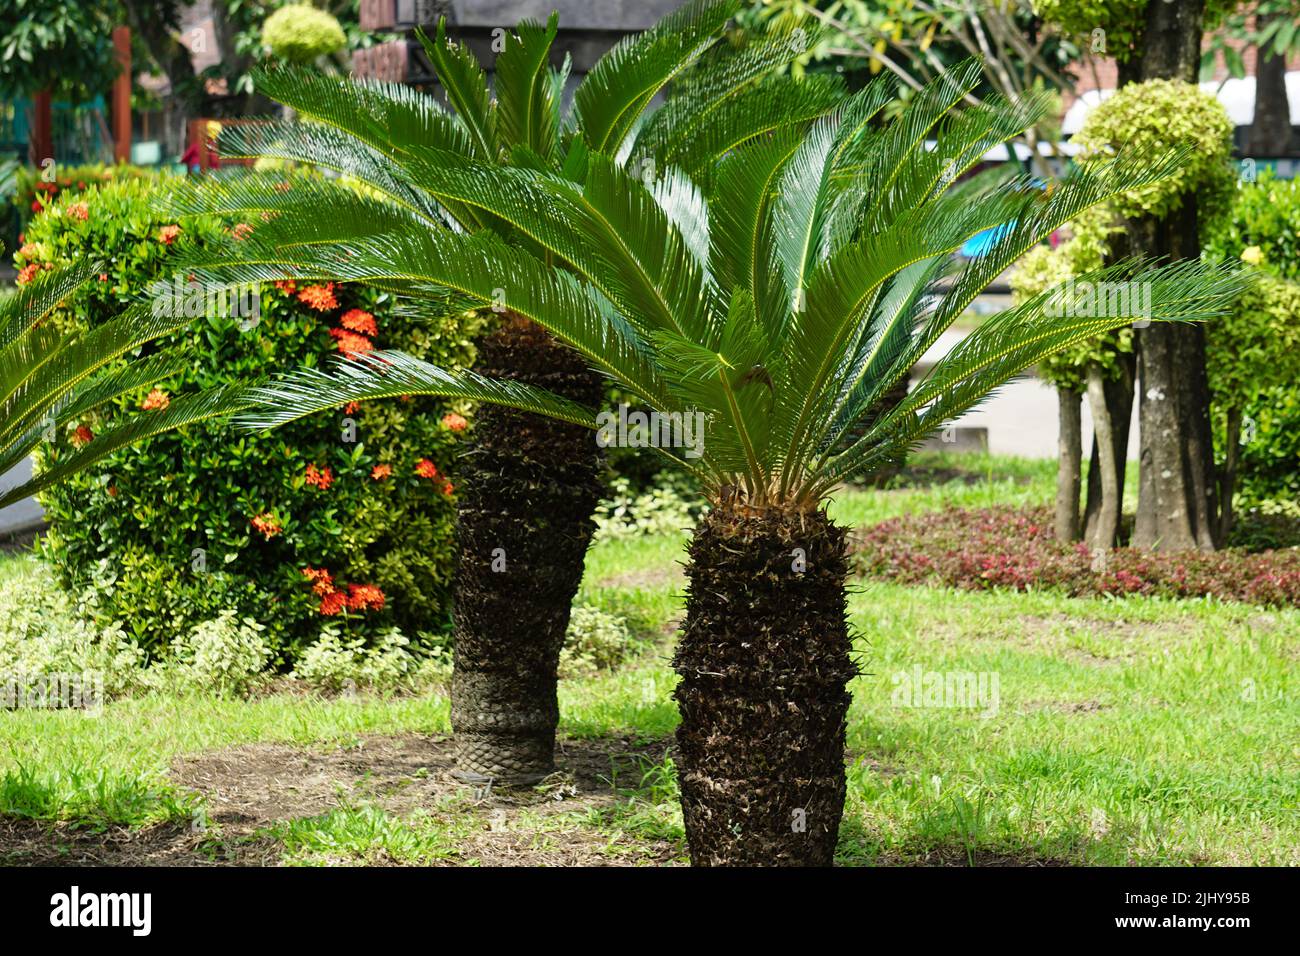 Cycas Revoluta (pakis haji, Cycas revoluta, Sotetsu, sago palm, king sago, sago cycad, Japanese sago palm) in the garden Stock Photo